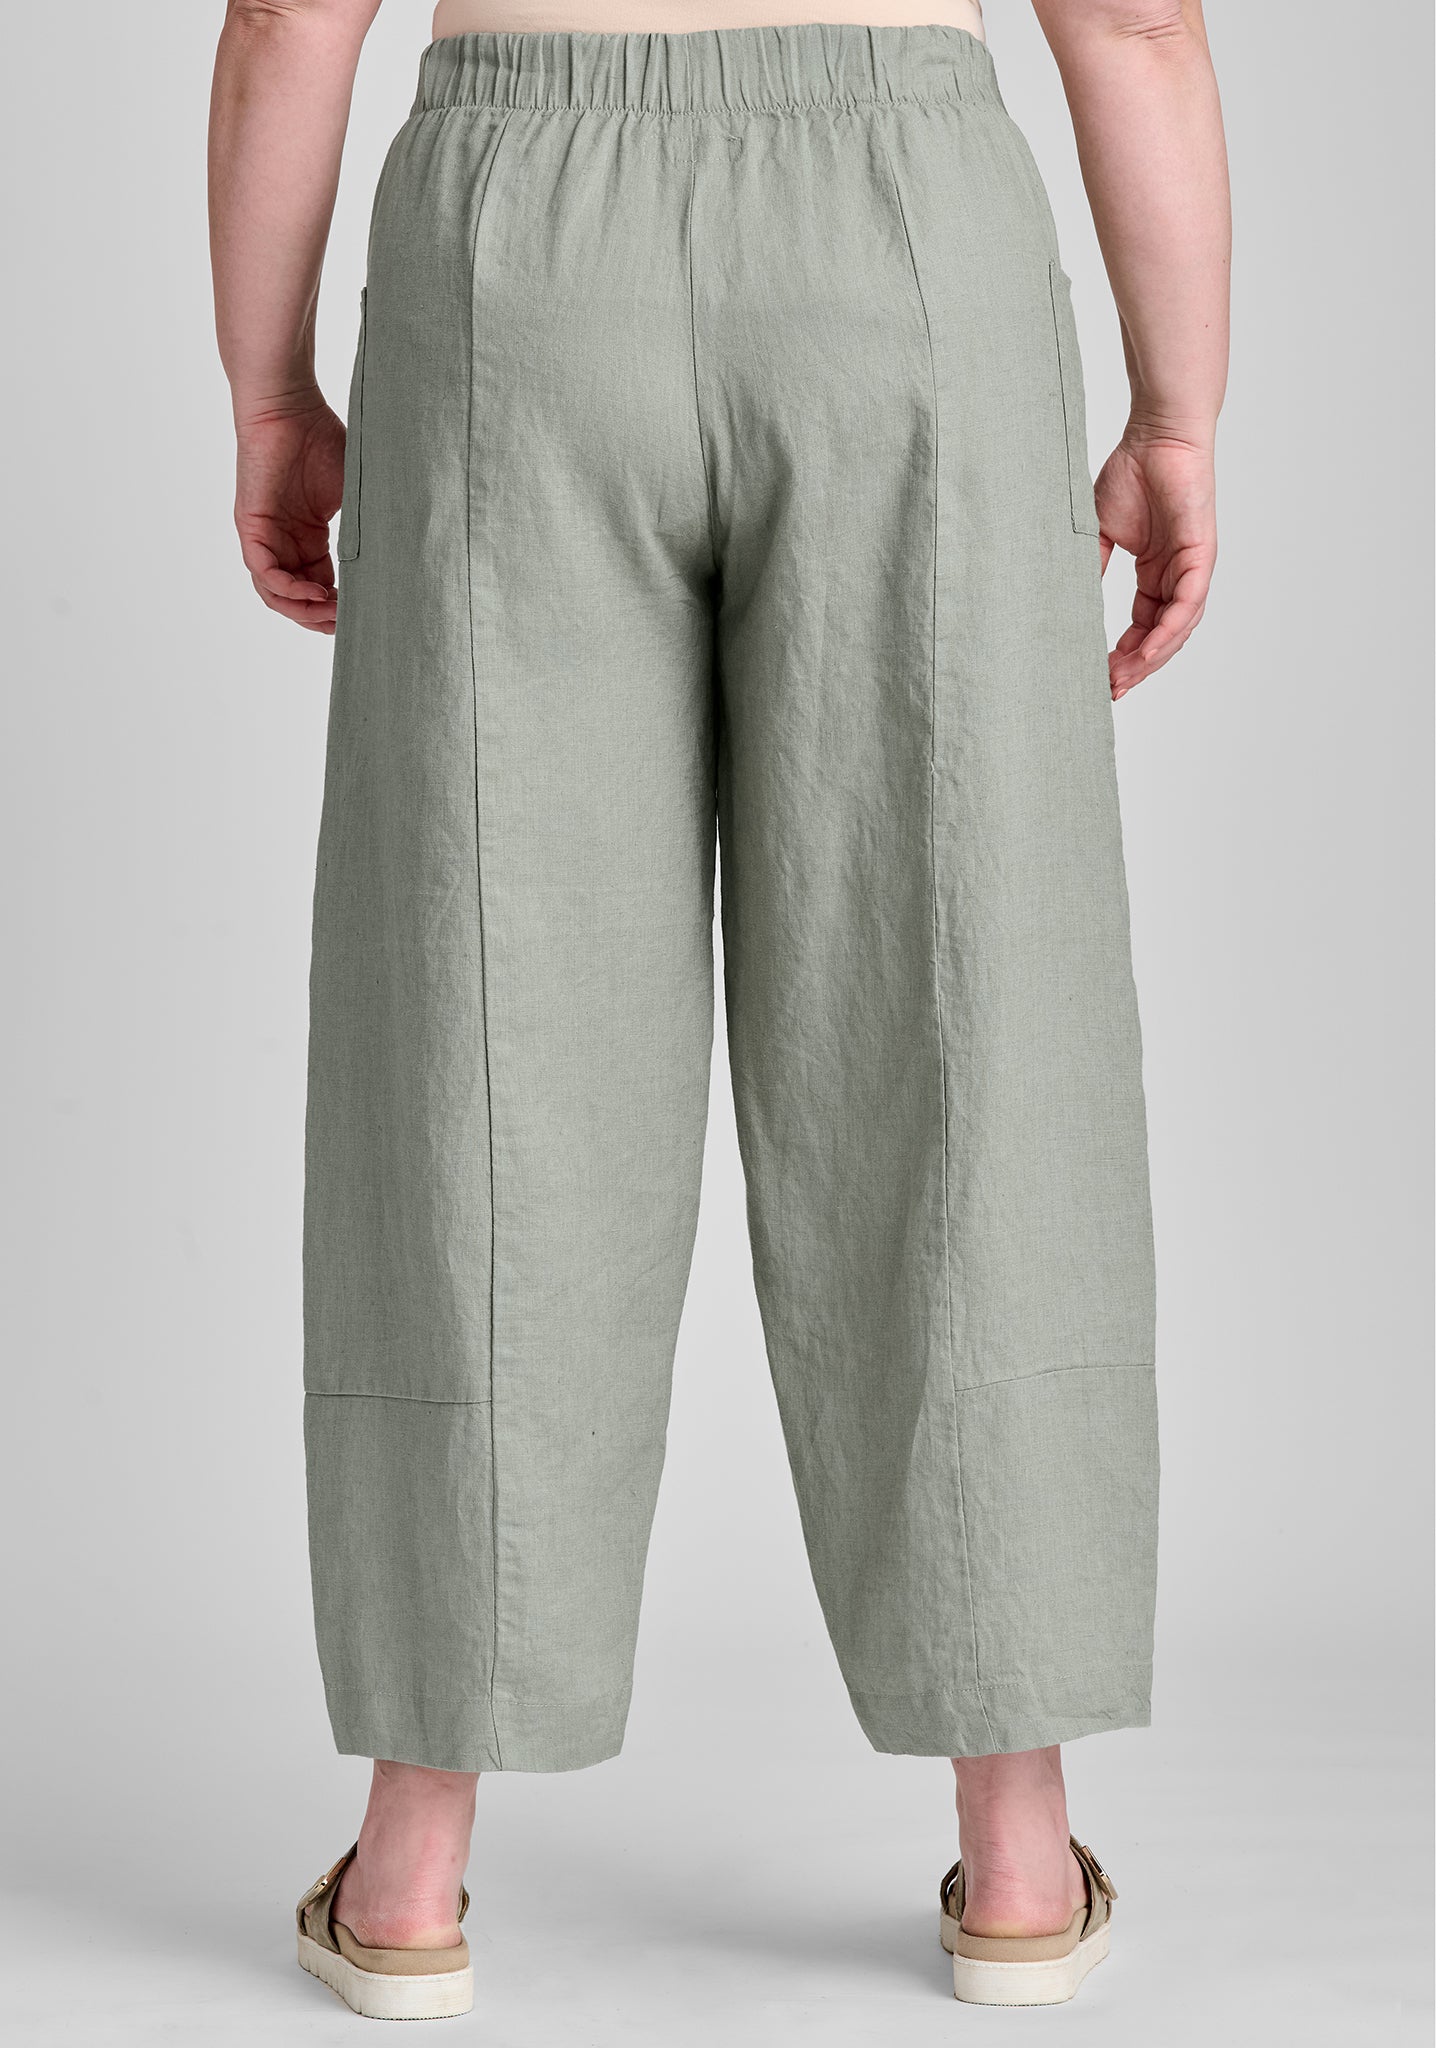 Seamly Pant - Linen Pants